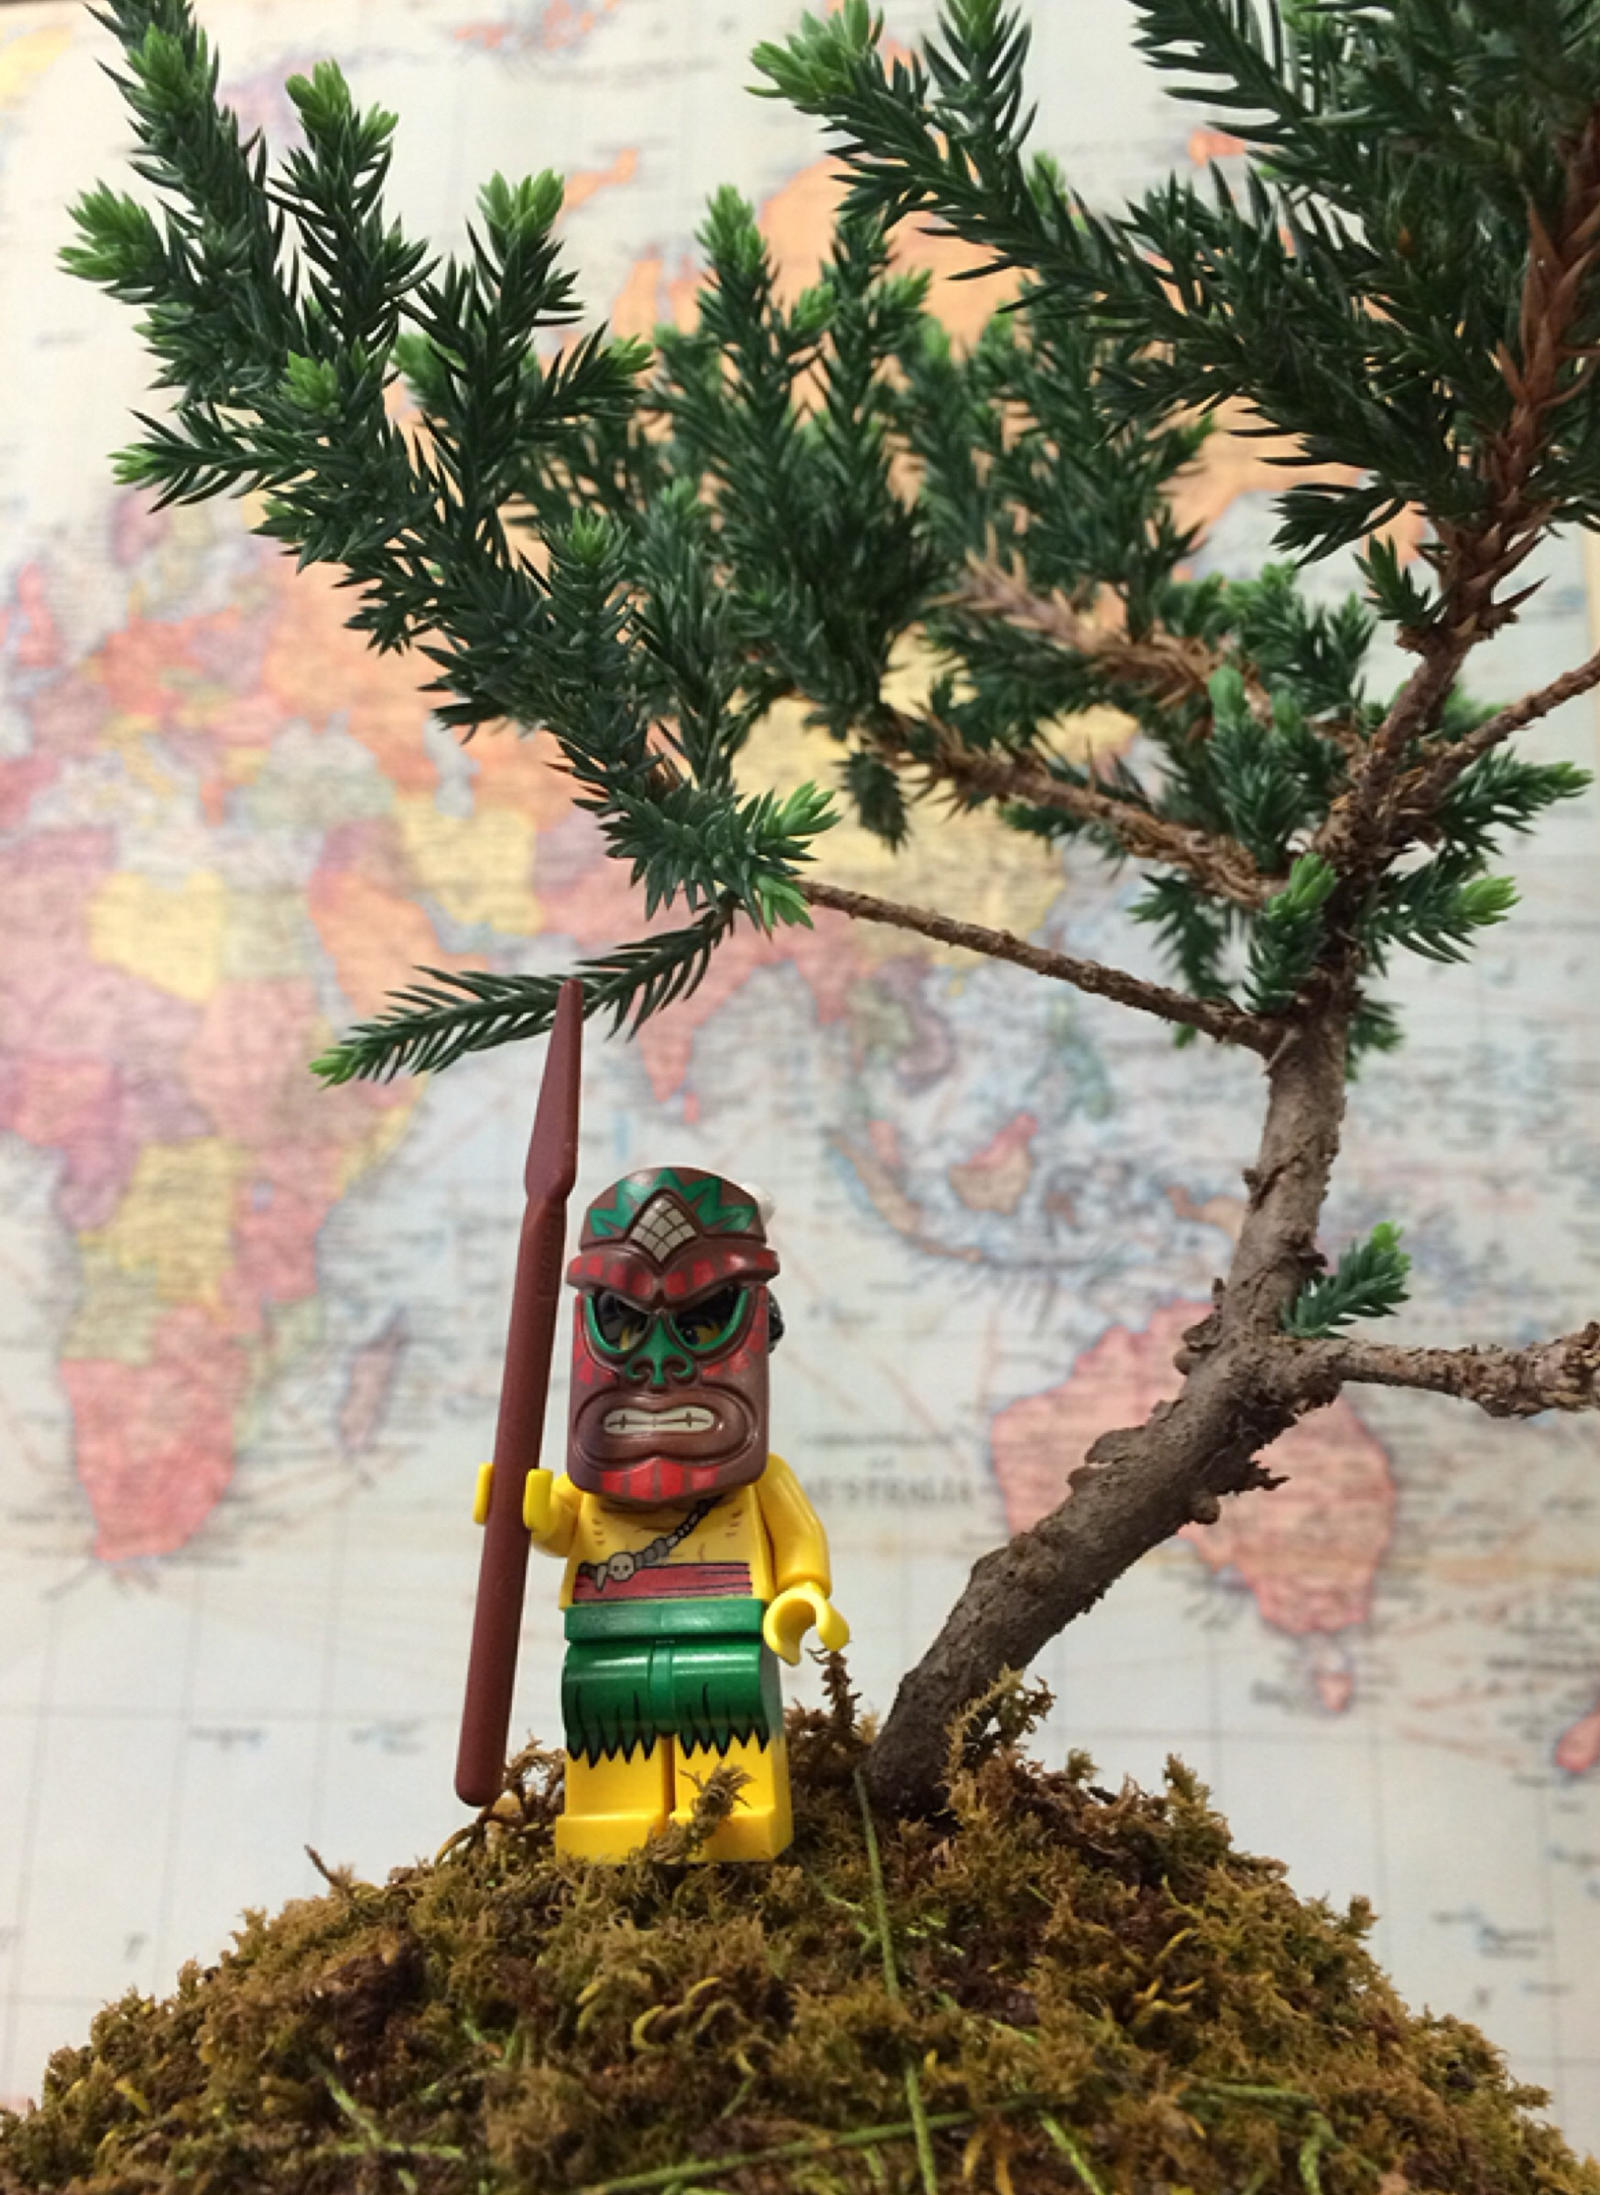 Cannibal LEGO bonsai